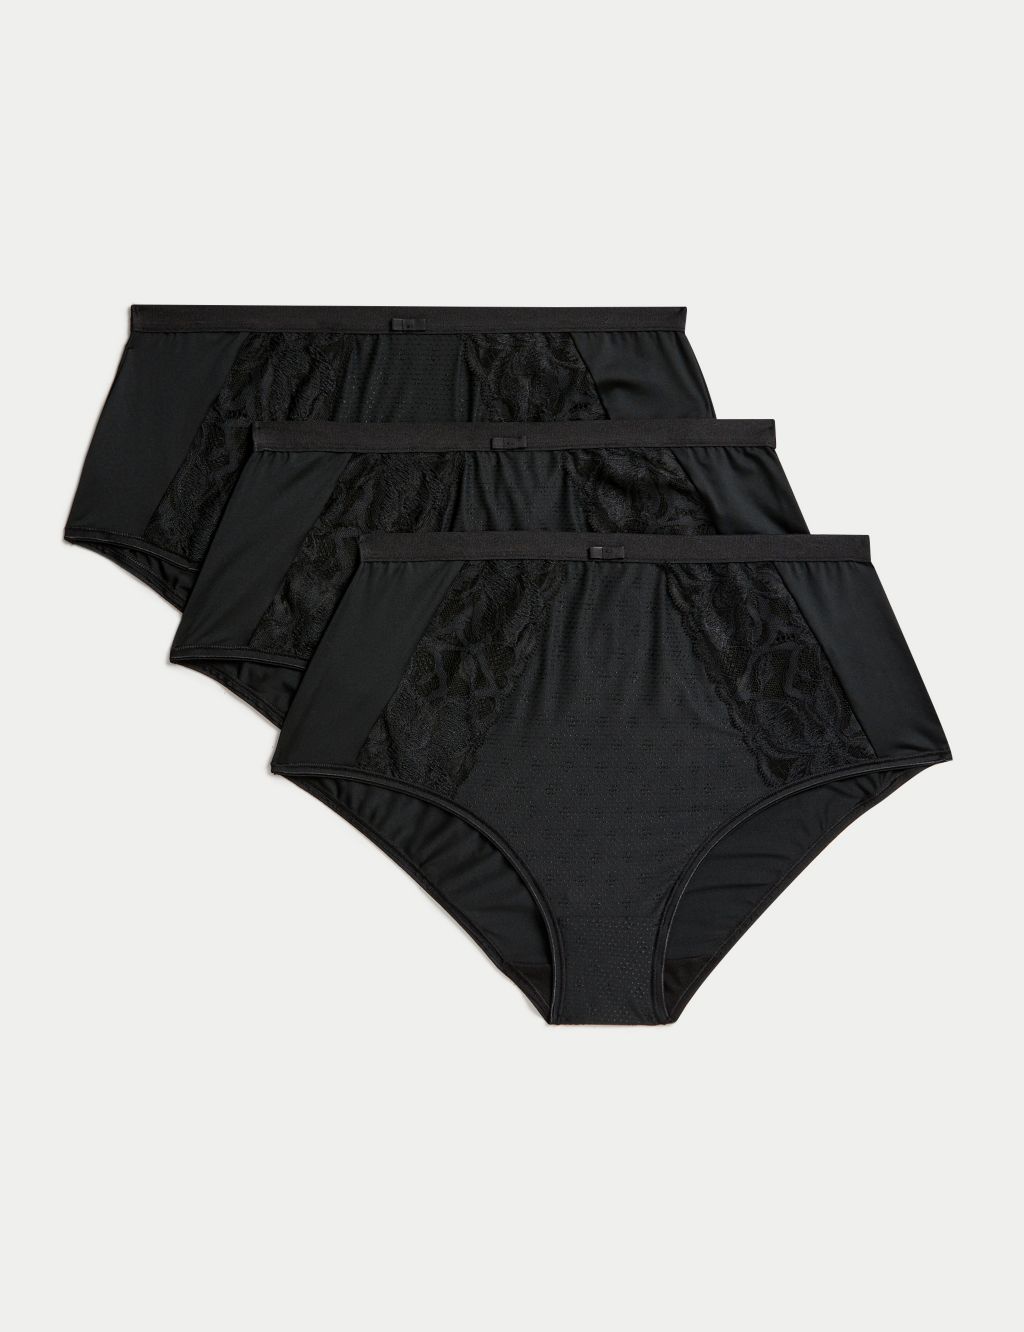 10 x Full Brief Black Pack Womens Underwear - XY Edition S M L XL